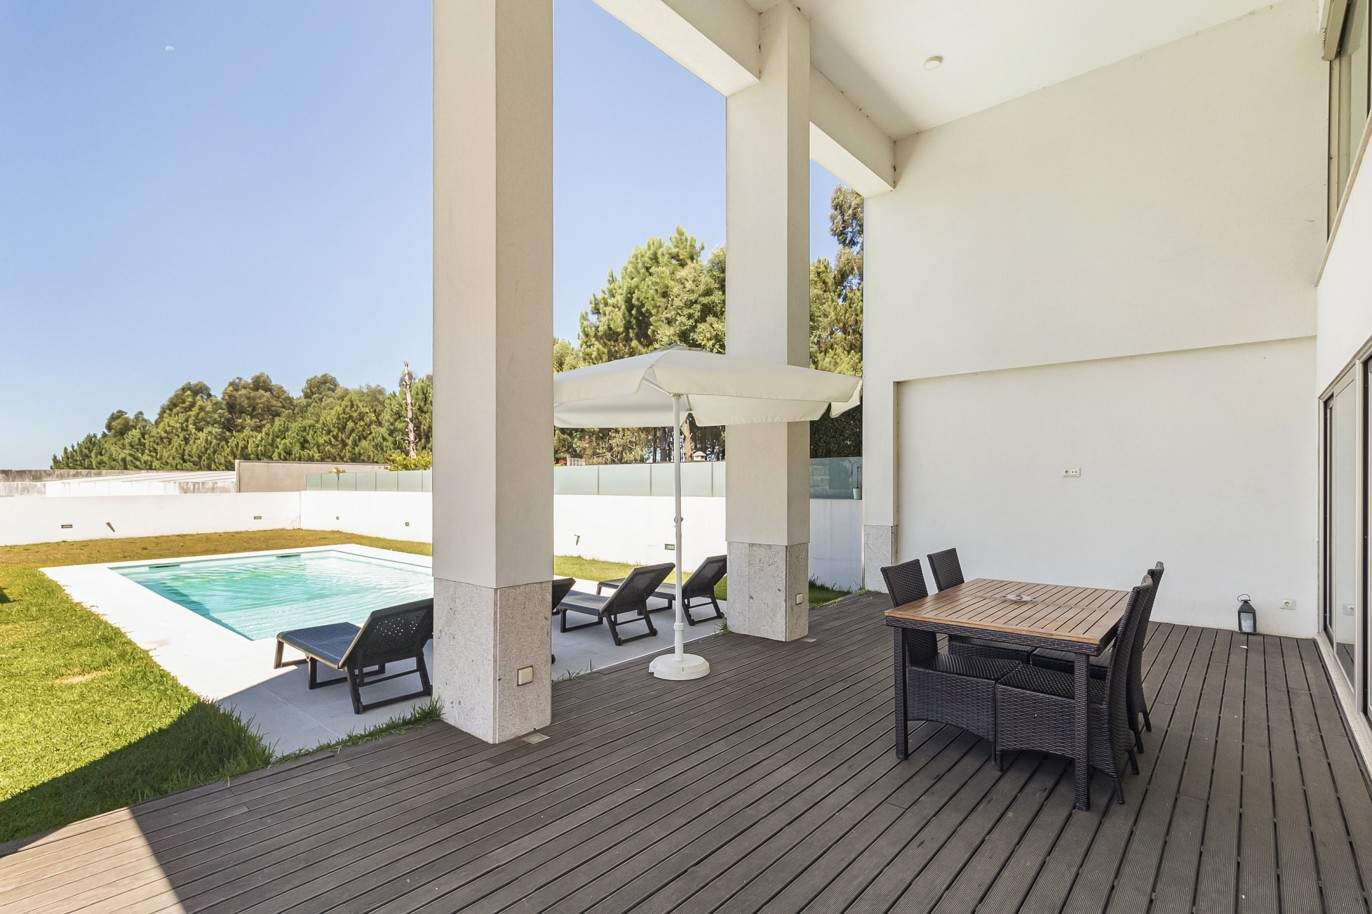 Vente : Villa de 3 chambres avec piscine, près de la plage, Madalena, V. N. Gaia, Porto, Portugal_208548